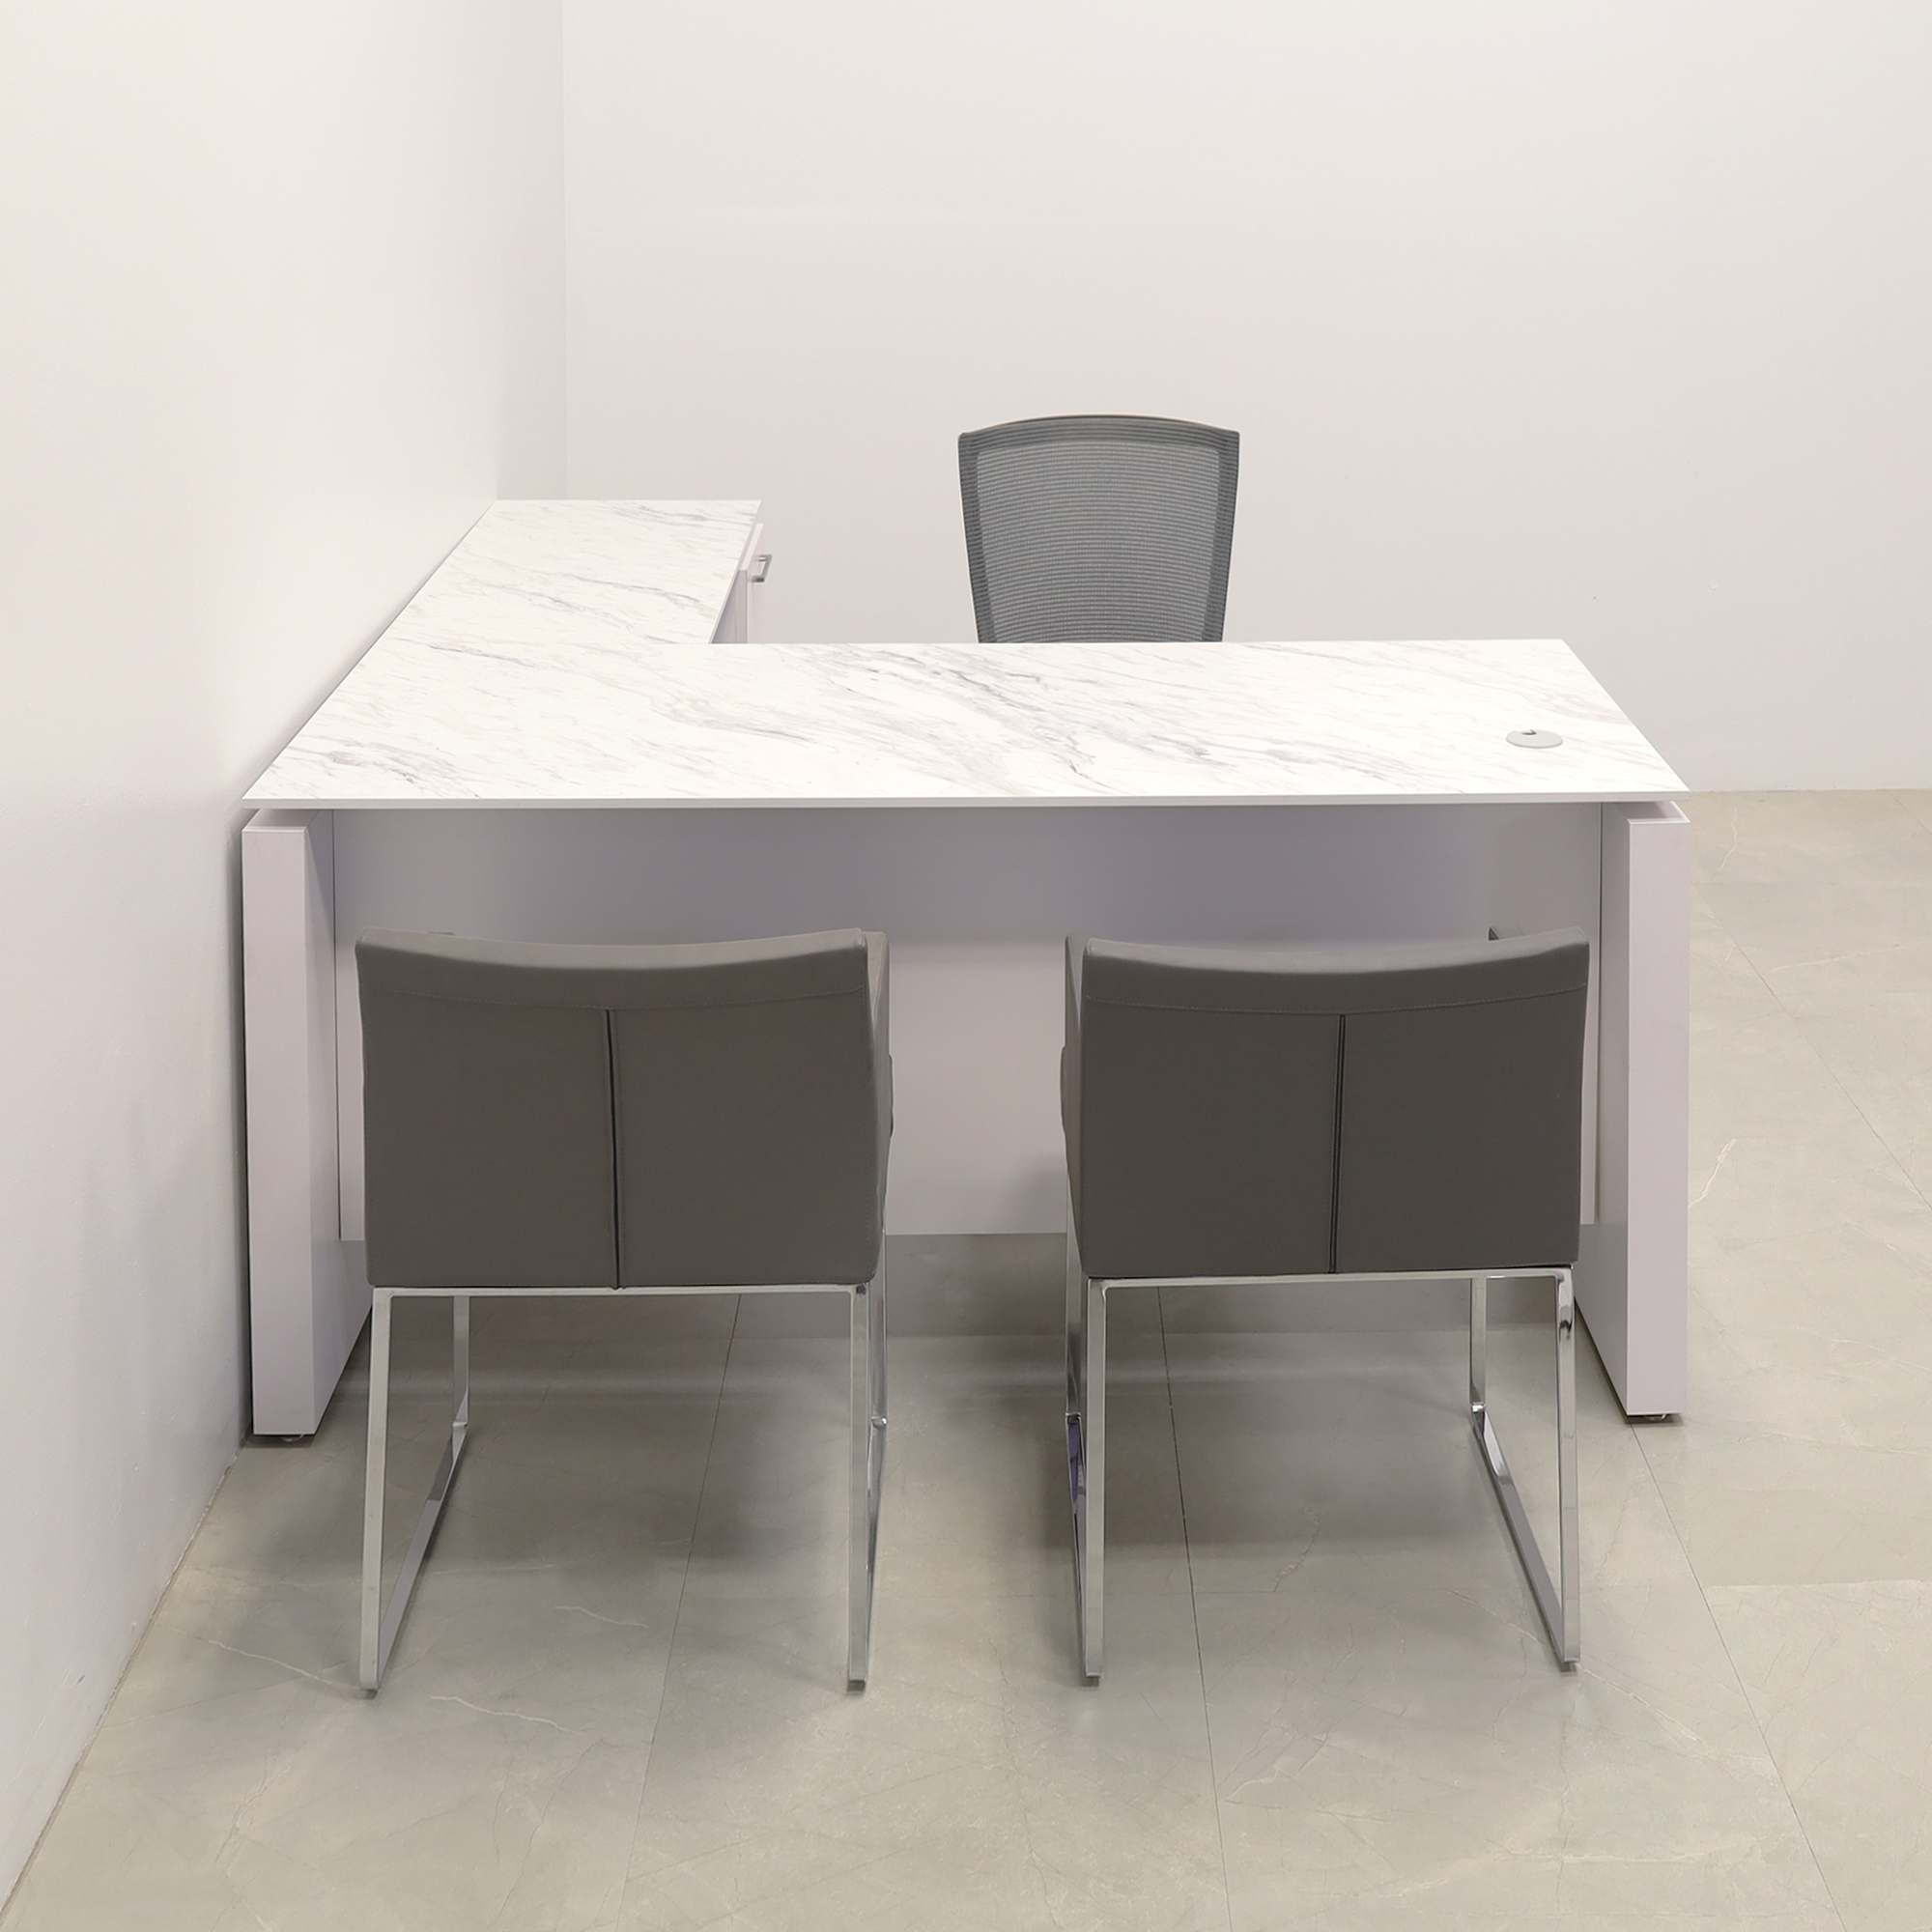 72-inch Denver L-Shape Executive Desk with return & cabinet on left side when sitting, in 1/2